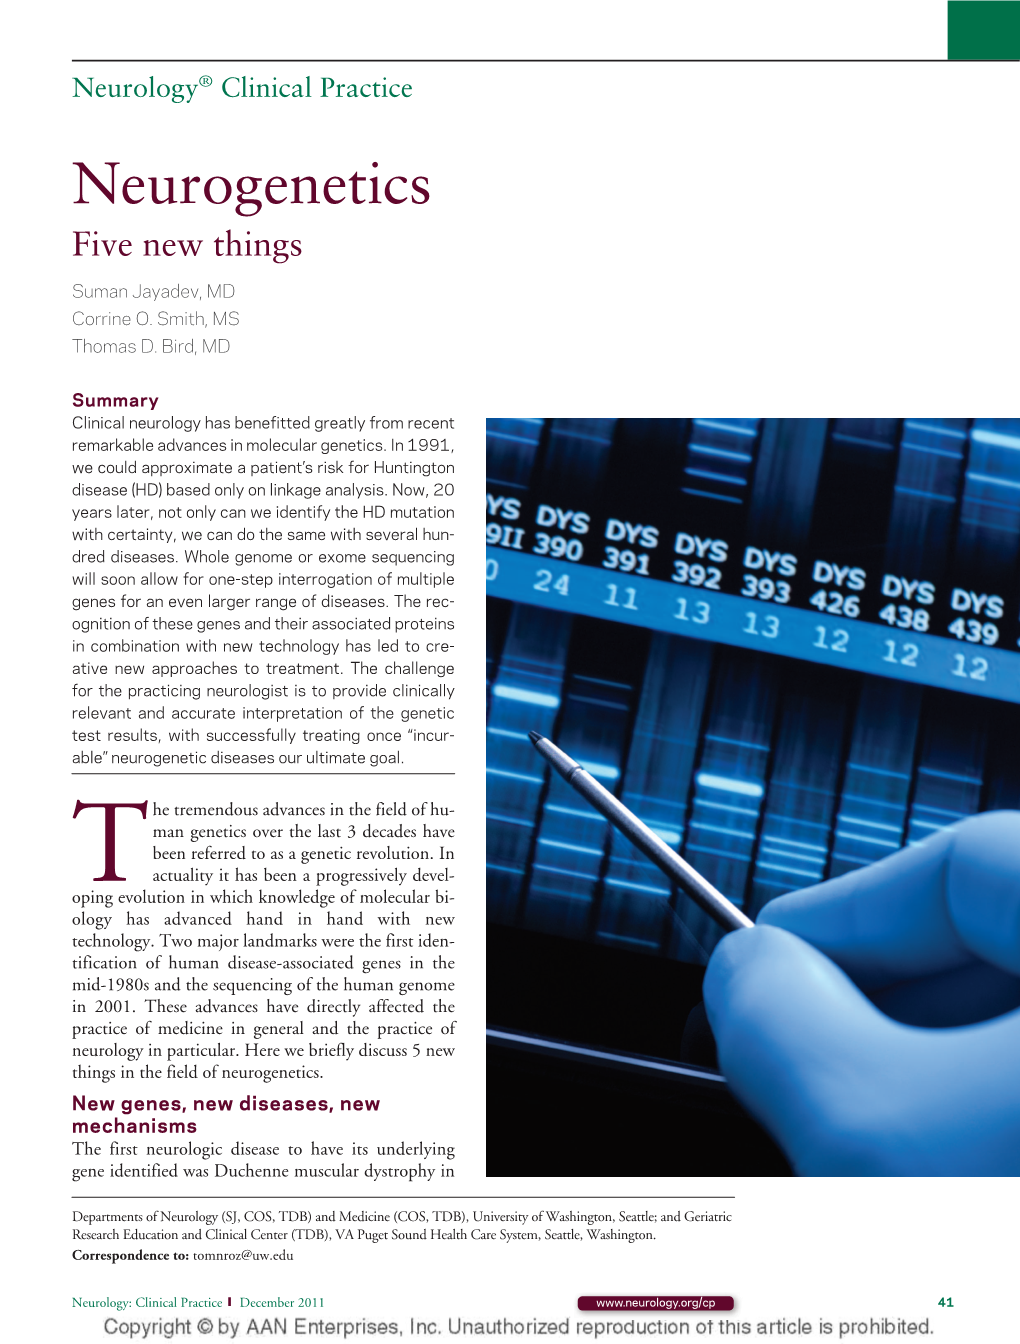 Neurogenetics Five New Things